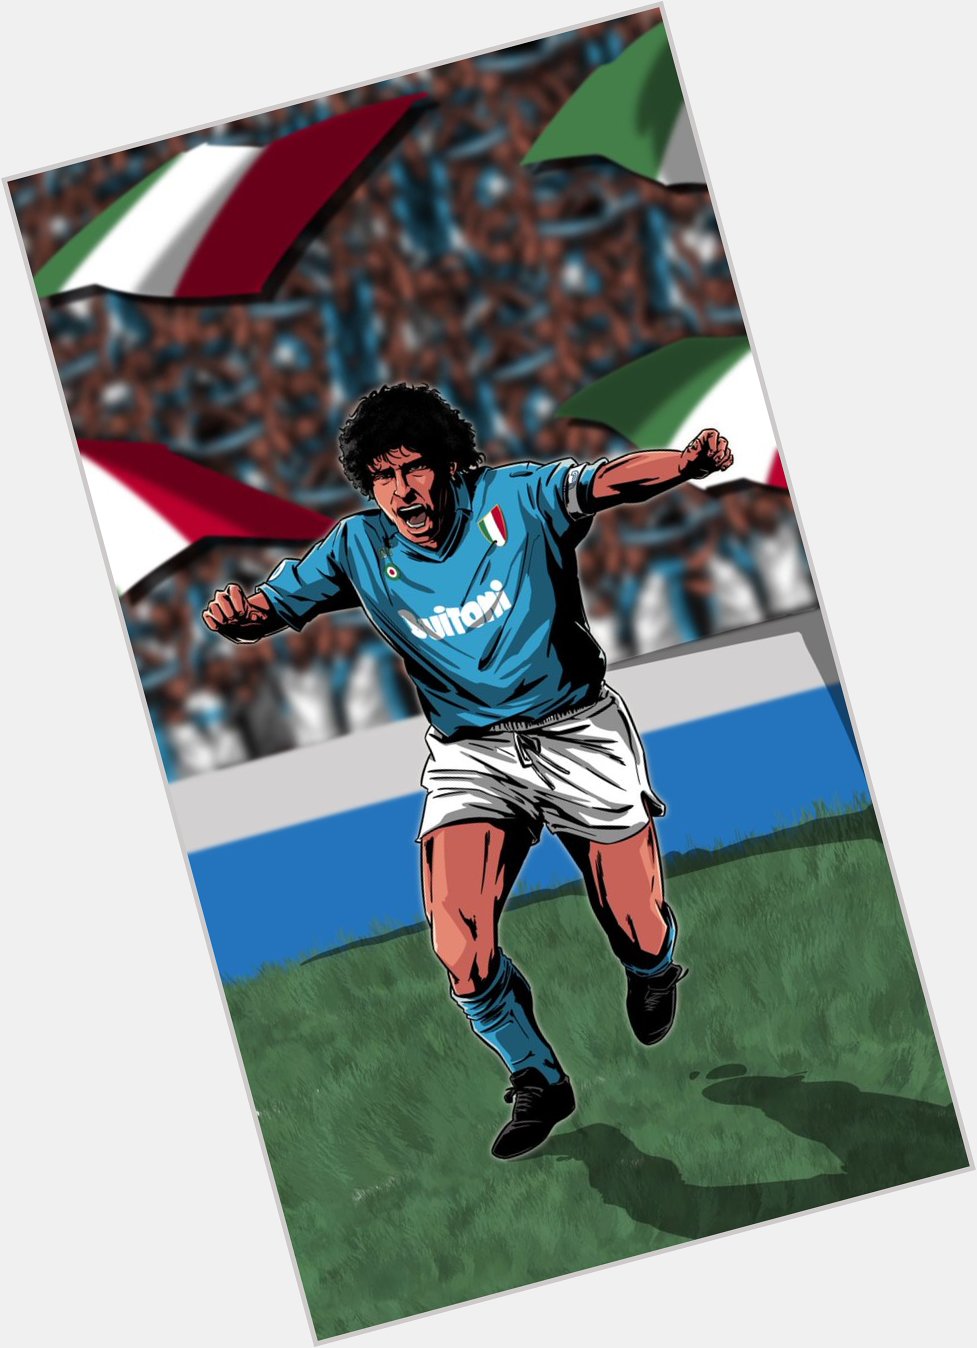 Happy birthday, Diego Maradona!  